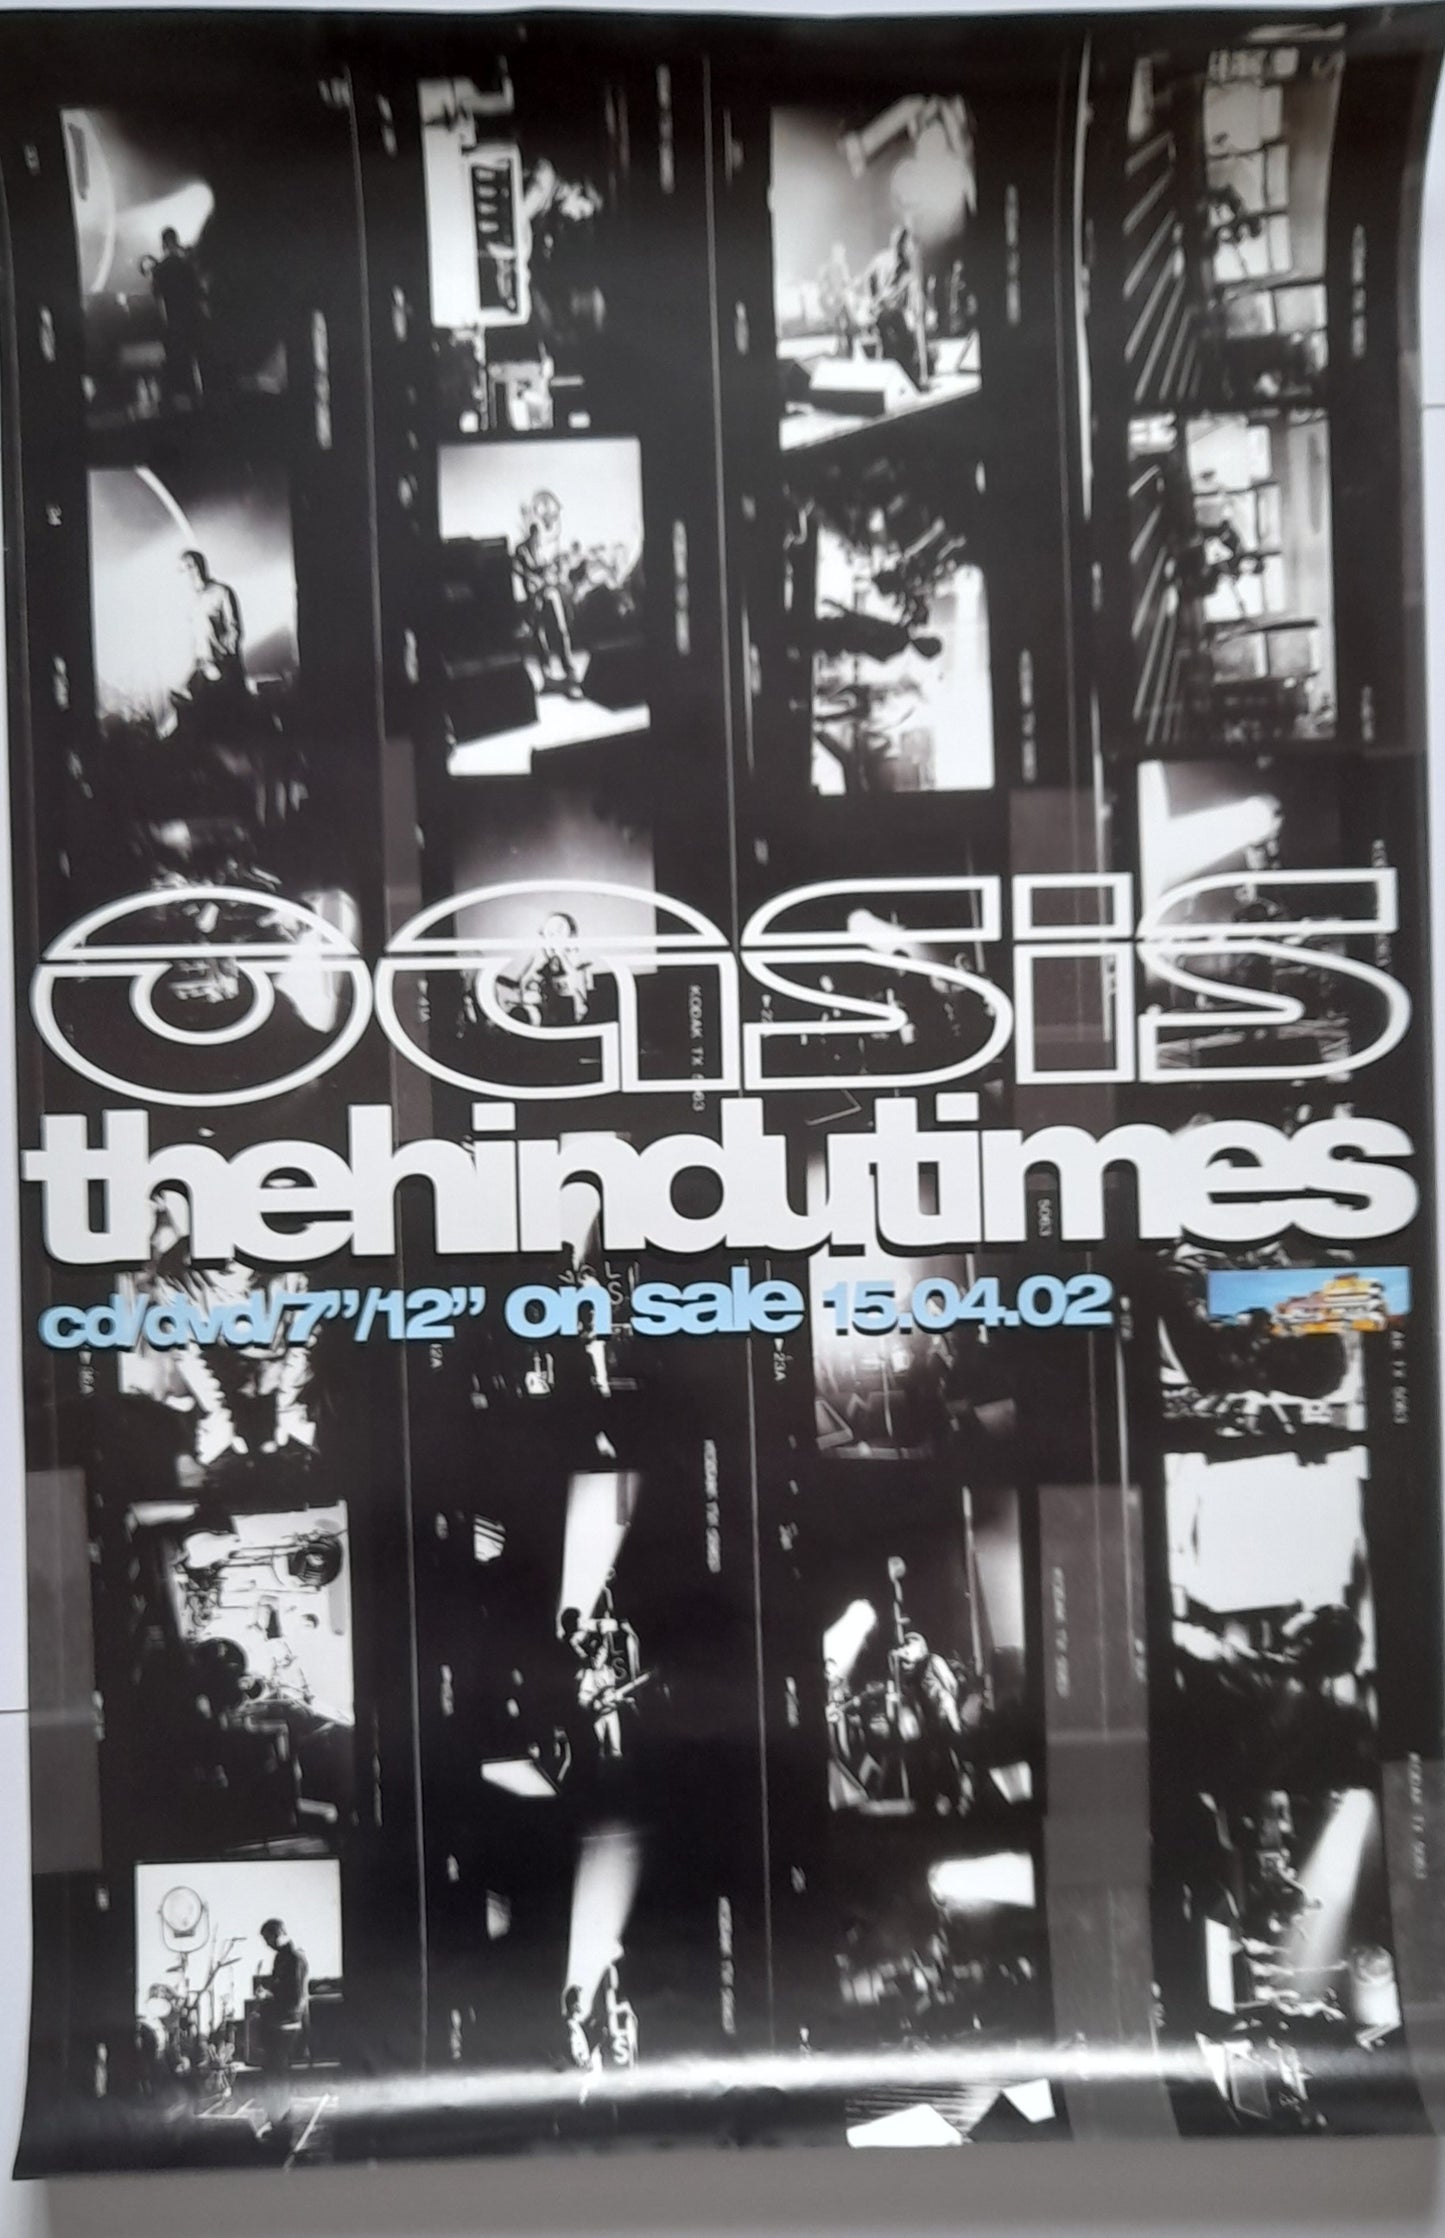 Oasis The Hindu Times single Promotional Poster - RewindPressPlay